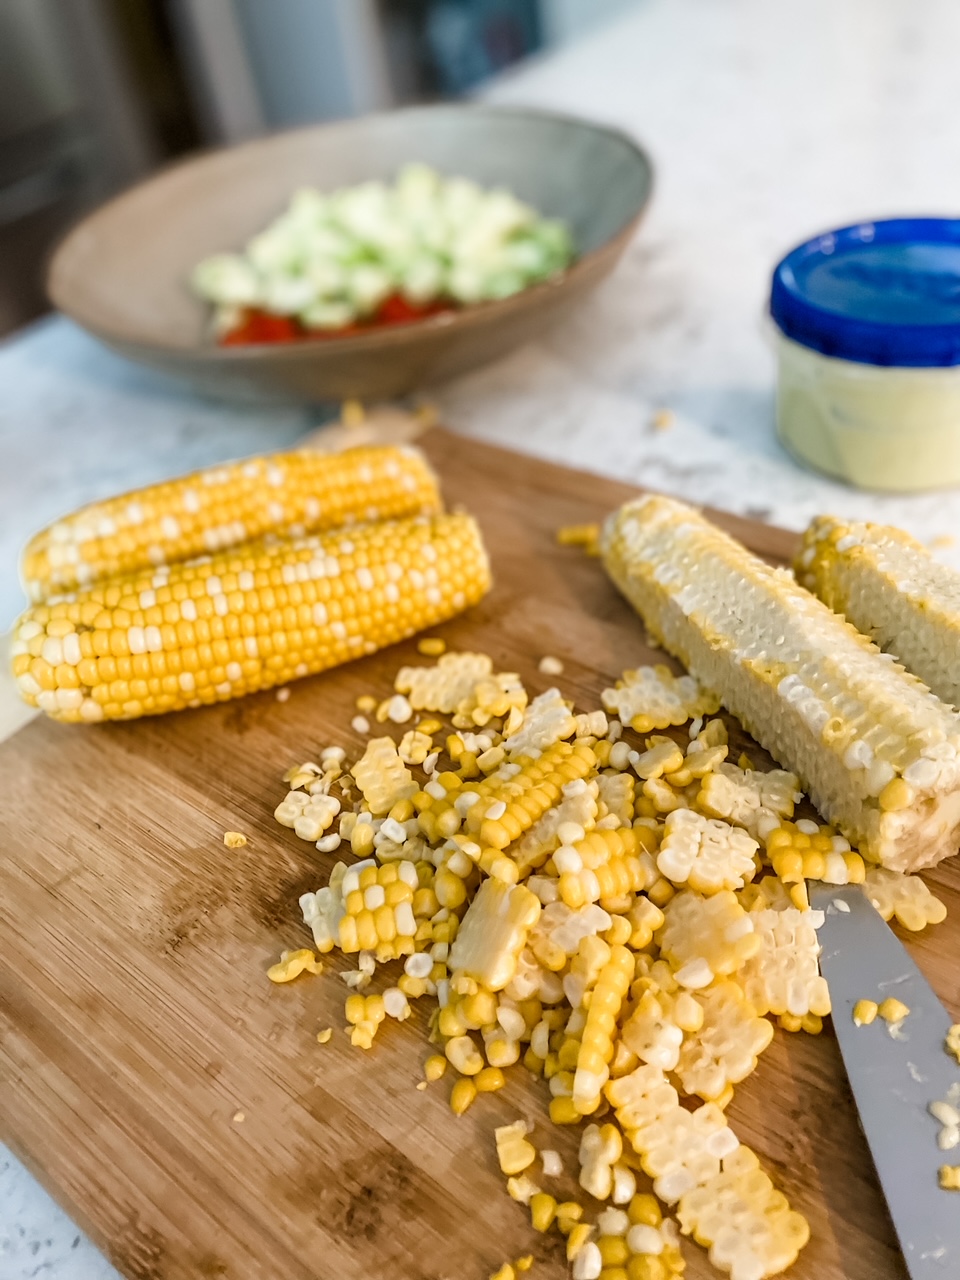 The sliced corn cobs